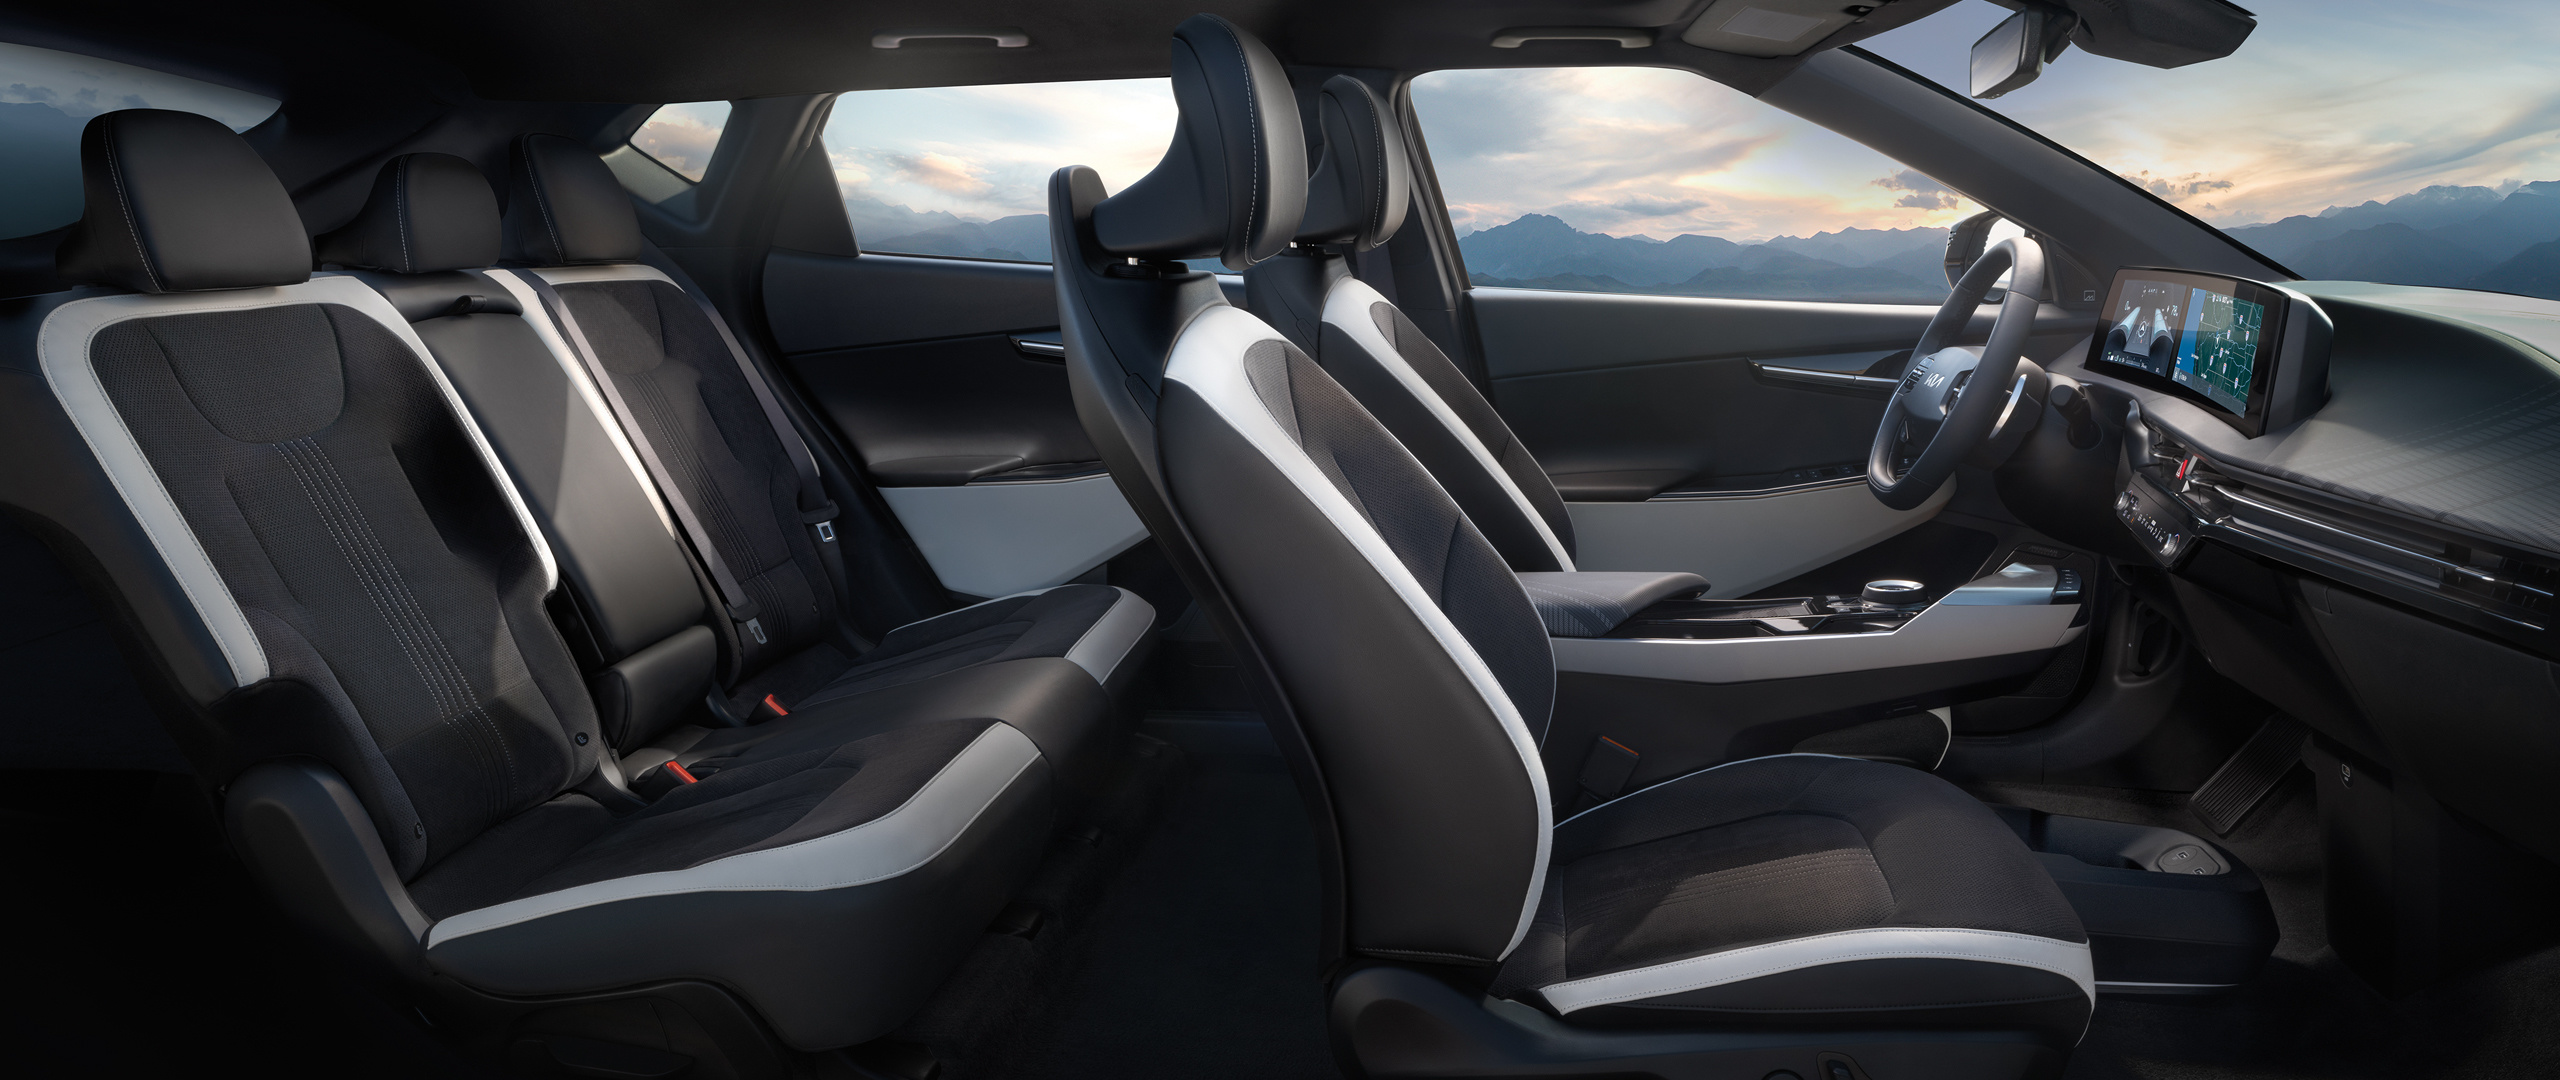 2022 Kia EV6 Spacious Interior Seating And Legroom Side View